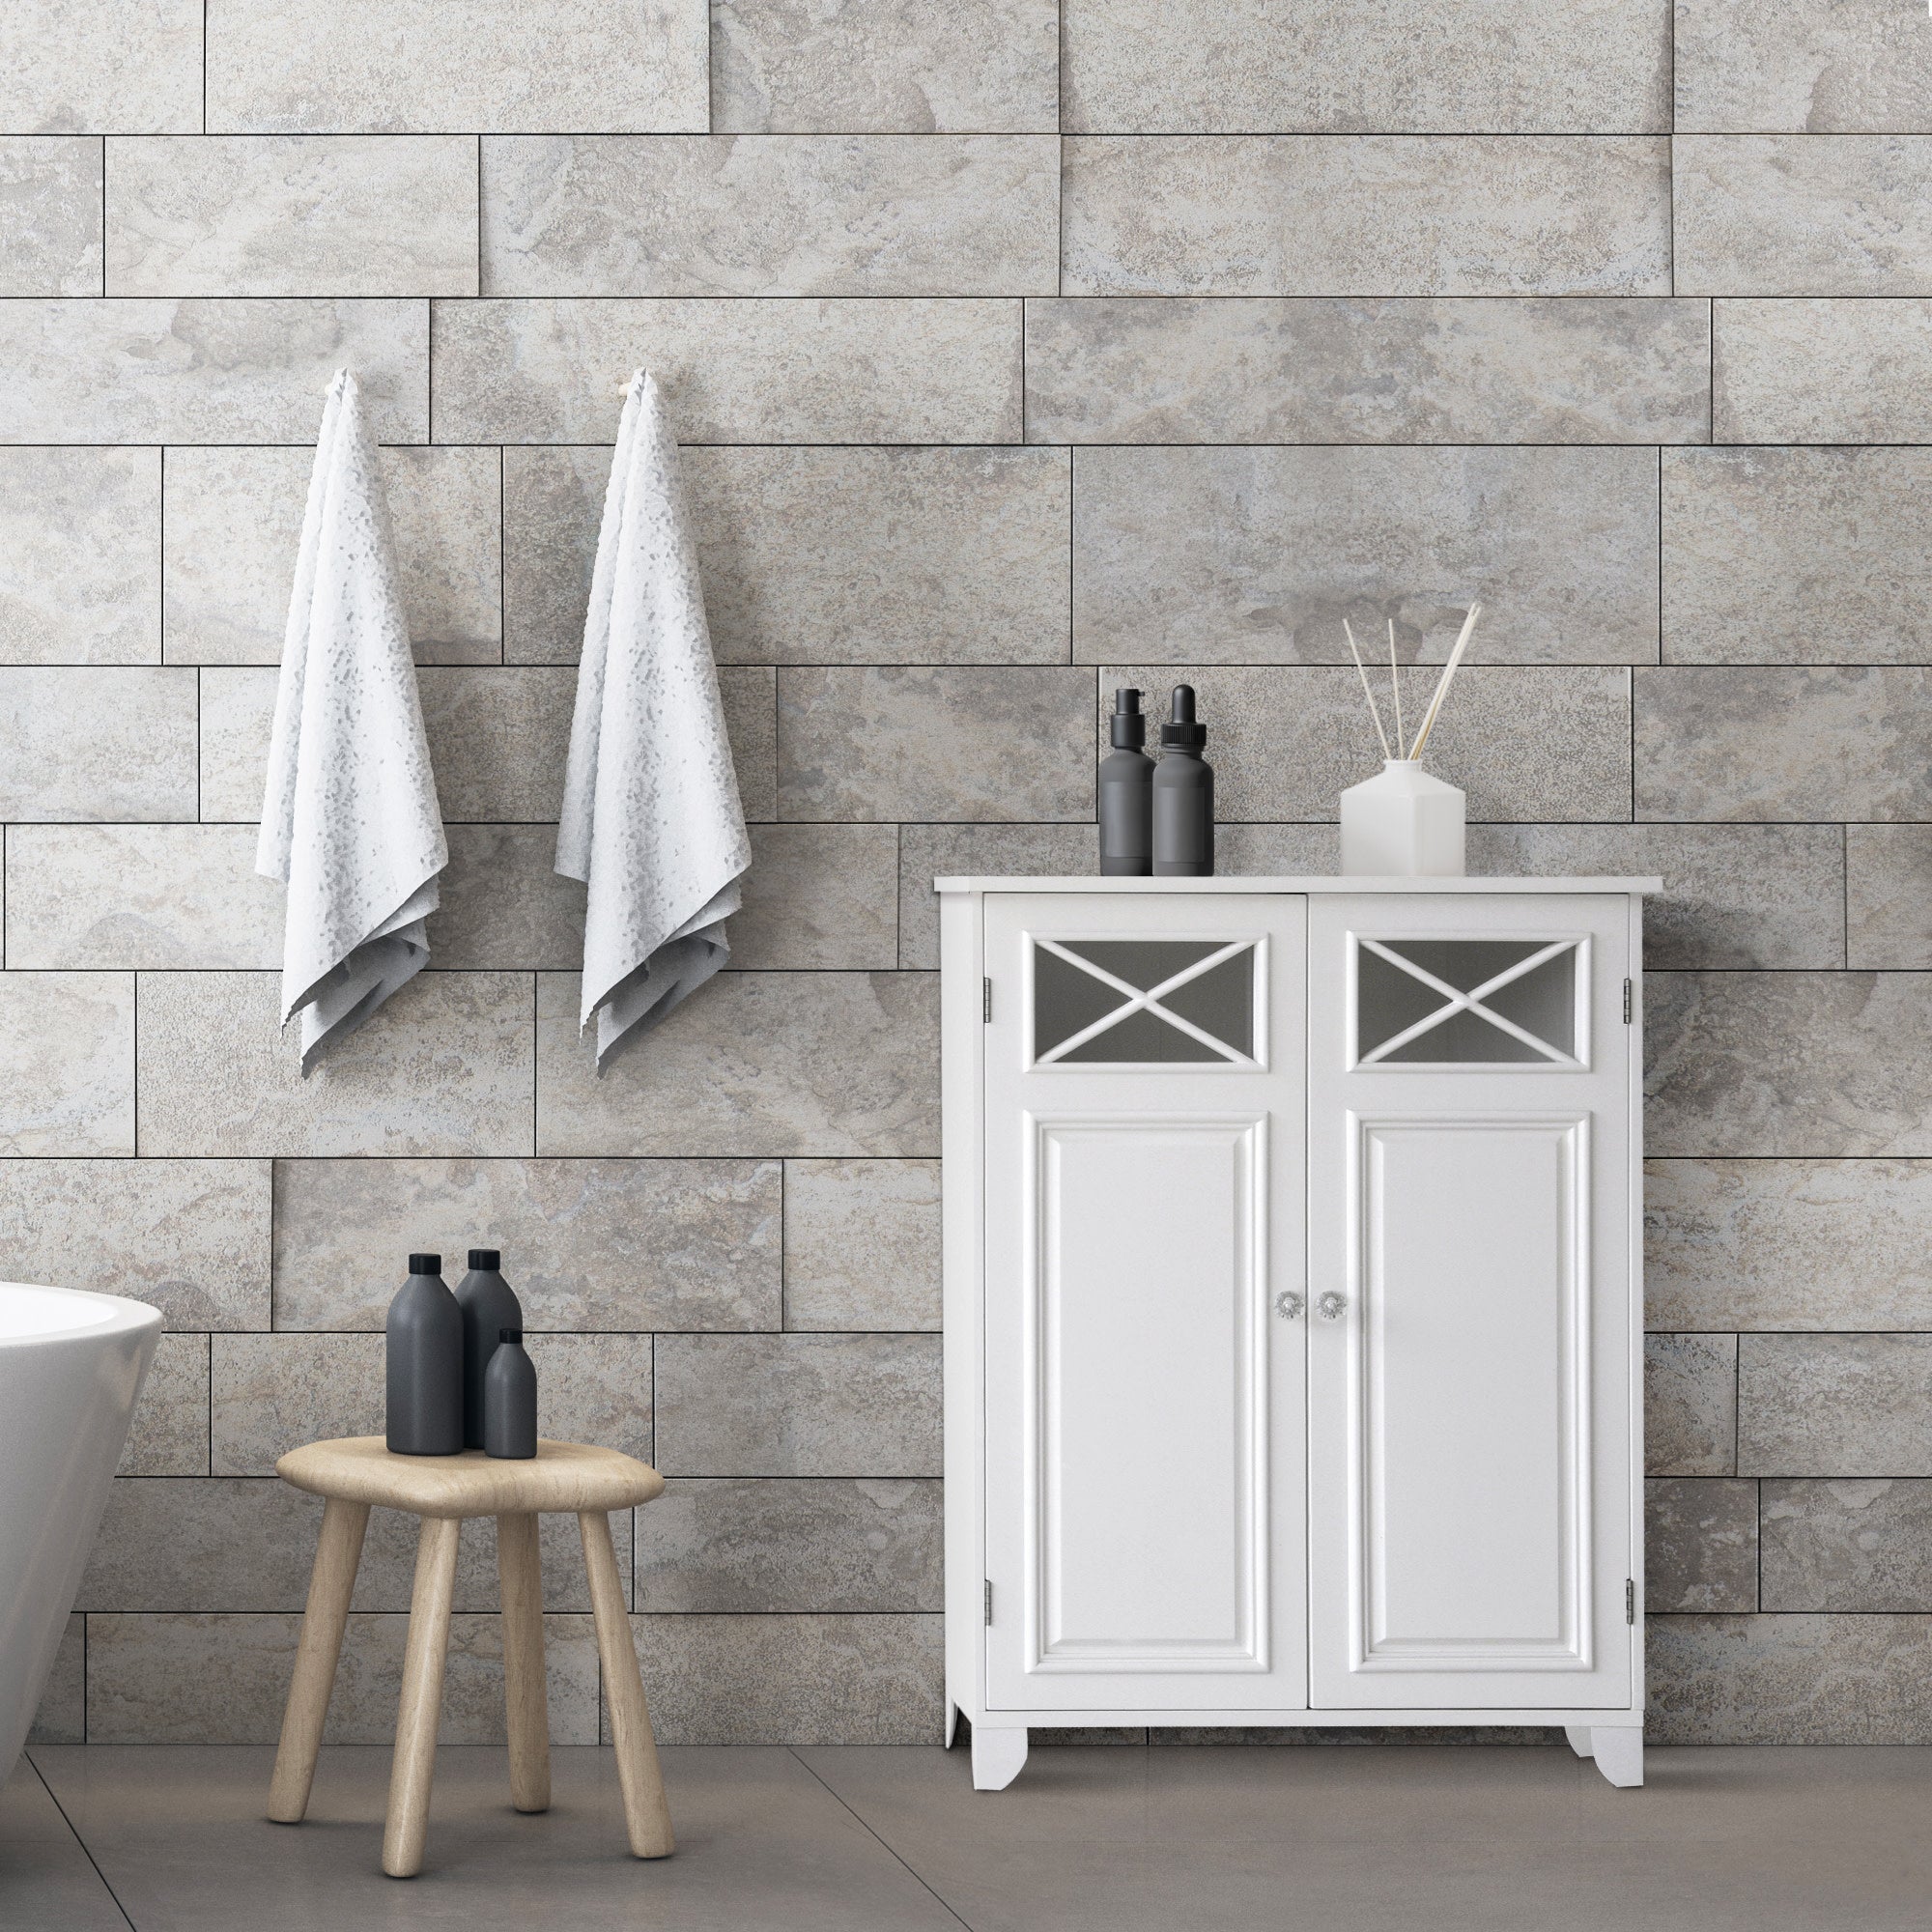 Teamson Home Dawson Free Standing Floor Storage Cabinet with Adjustable Shelves